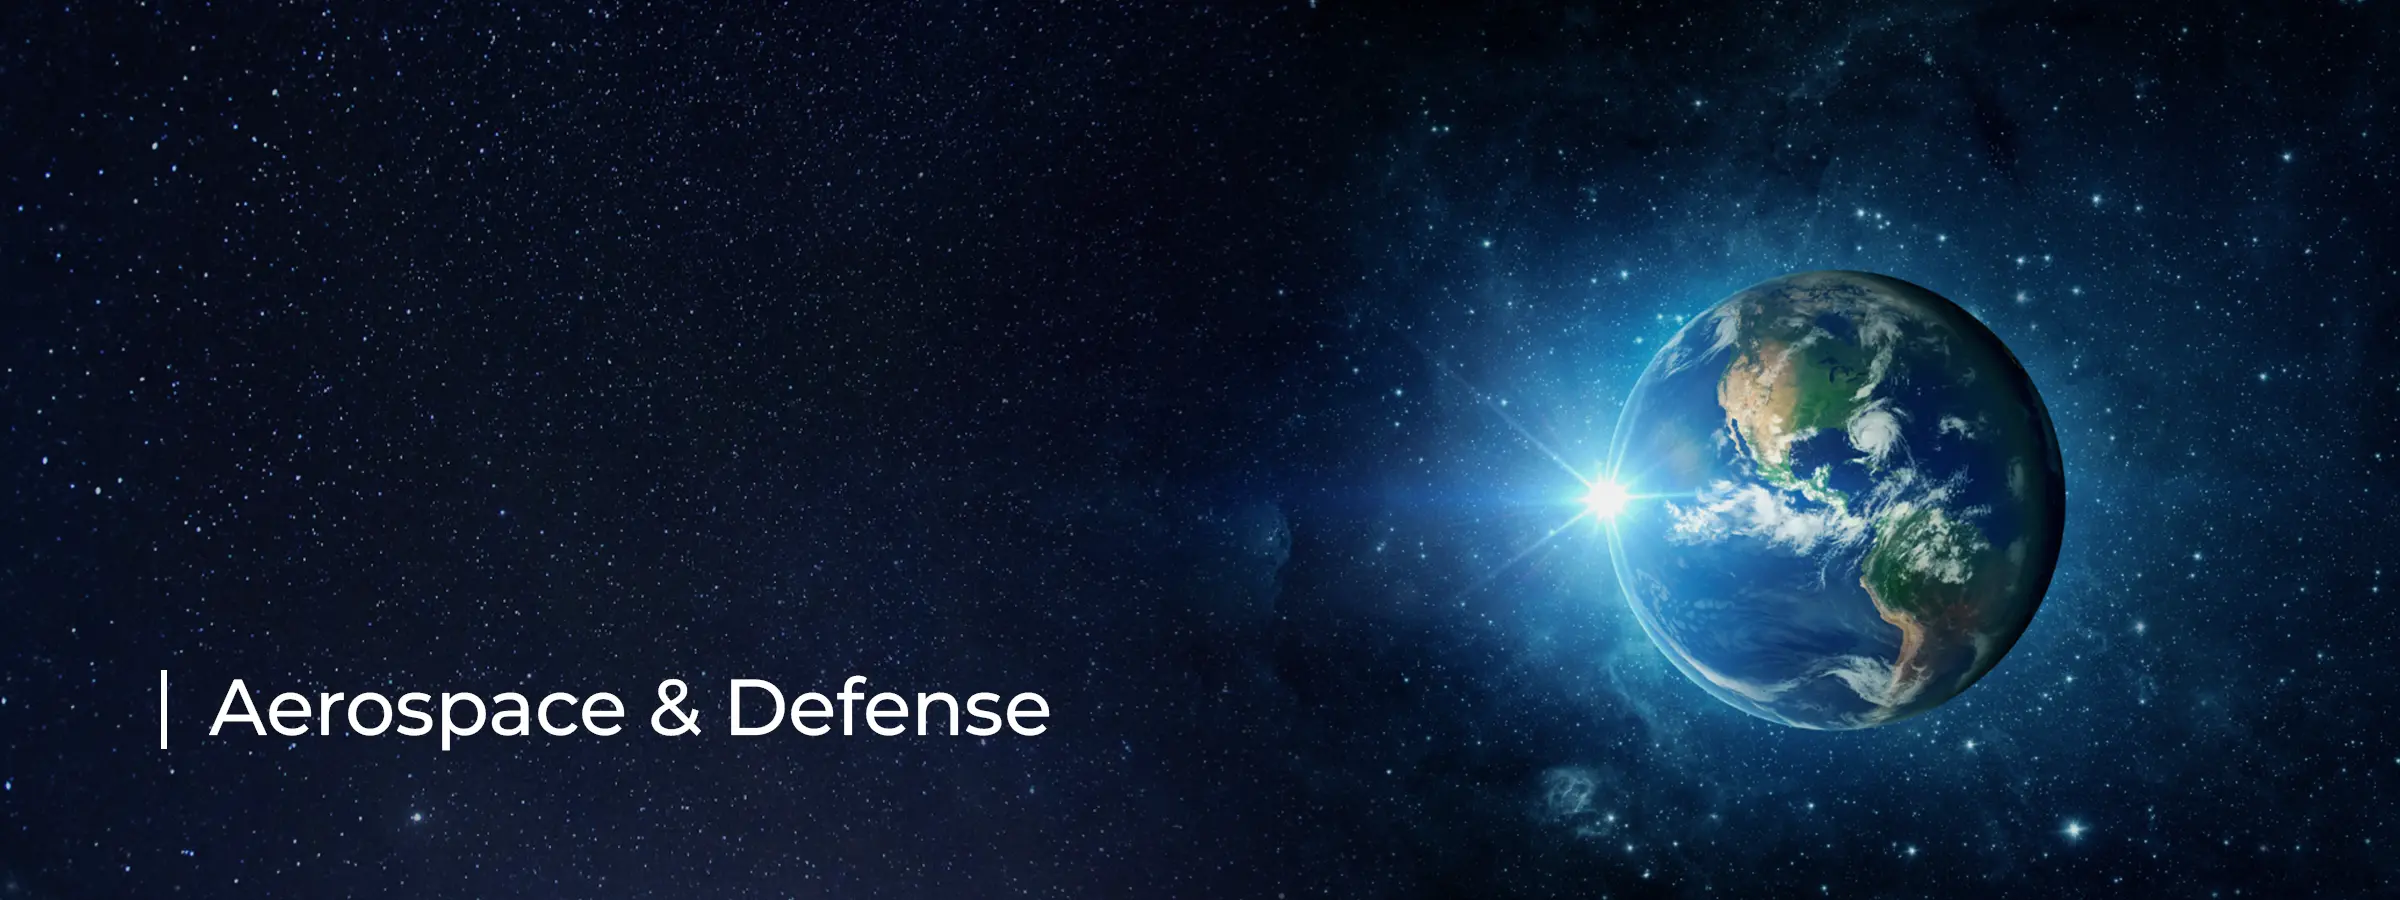 aerospace-defense-industry-banner